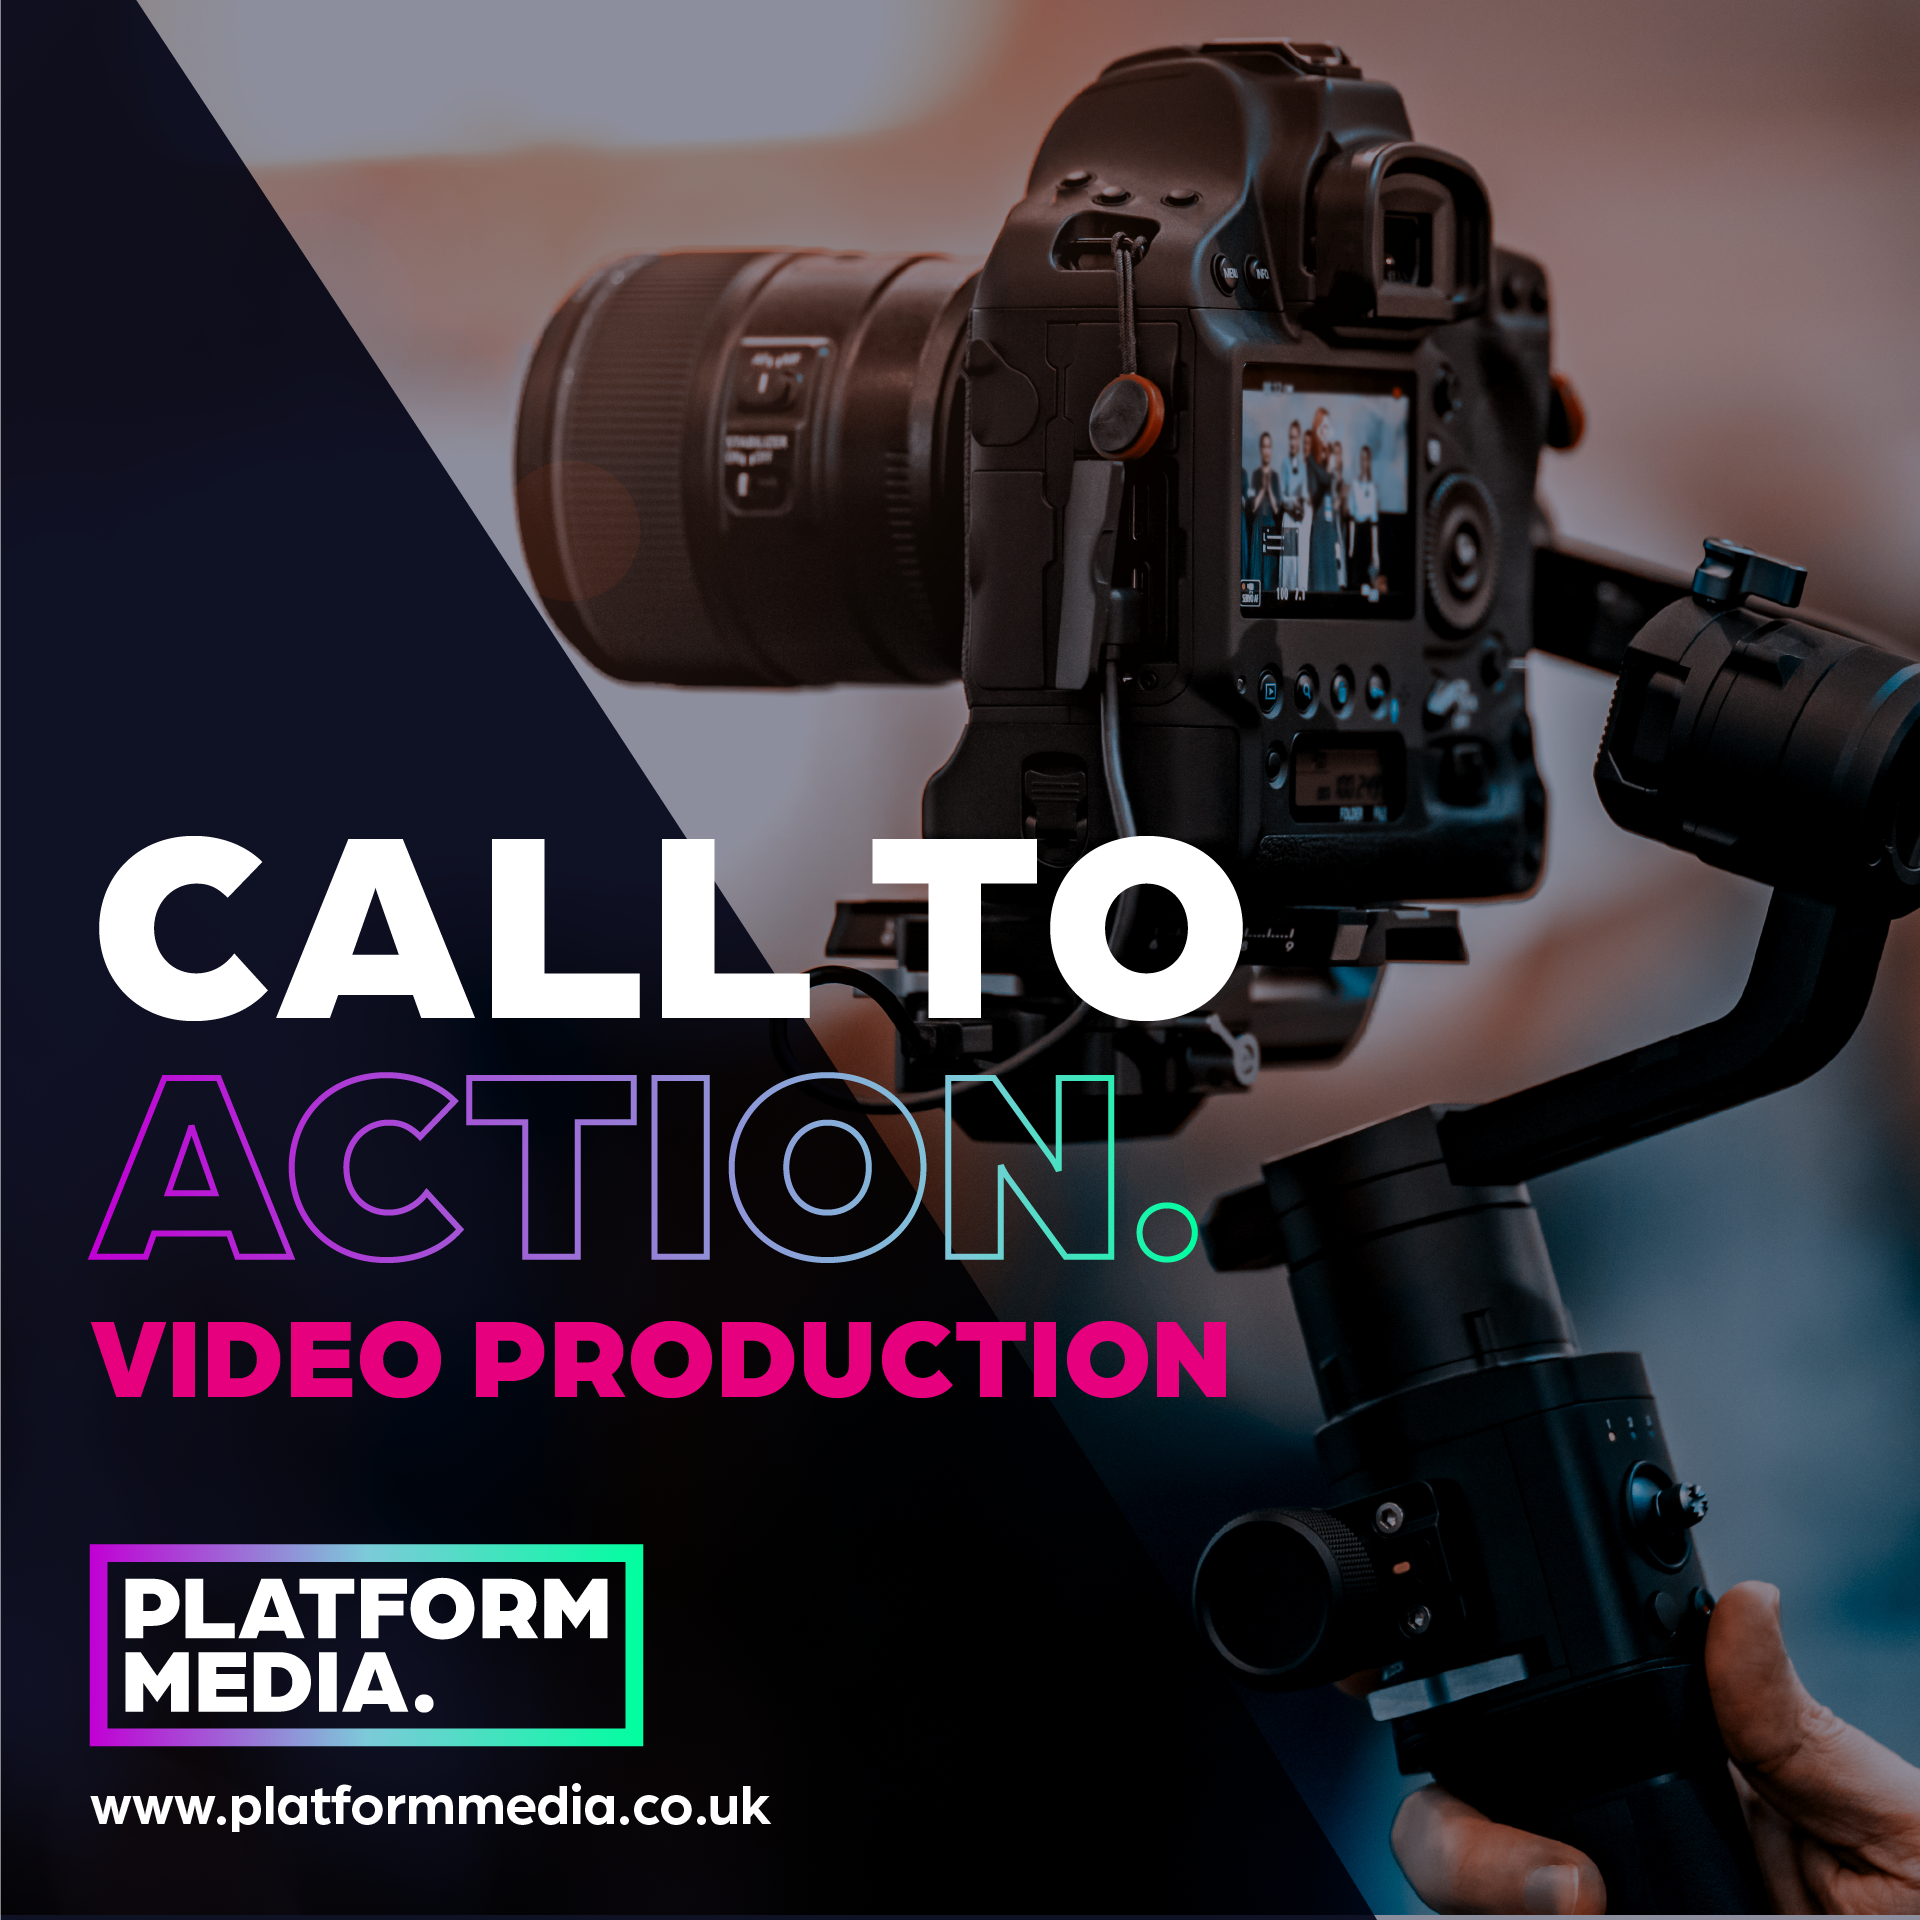 Video Production - Platform Media